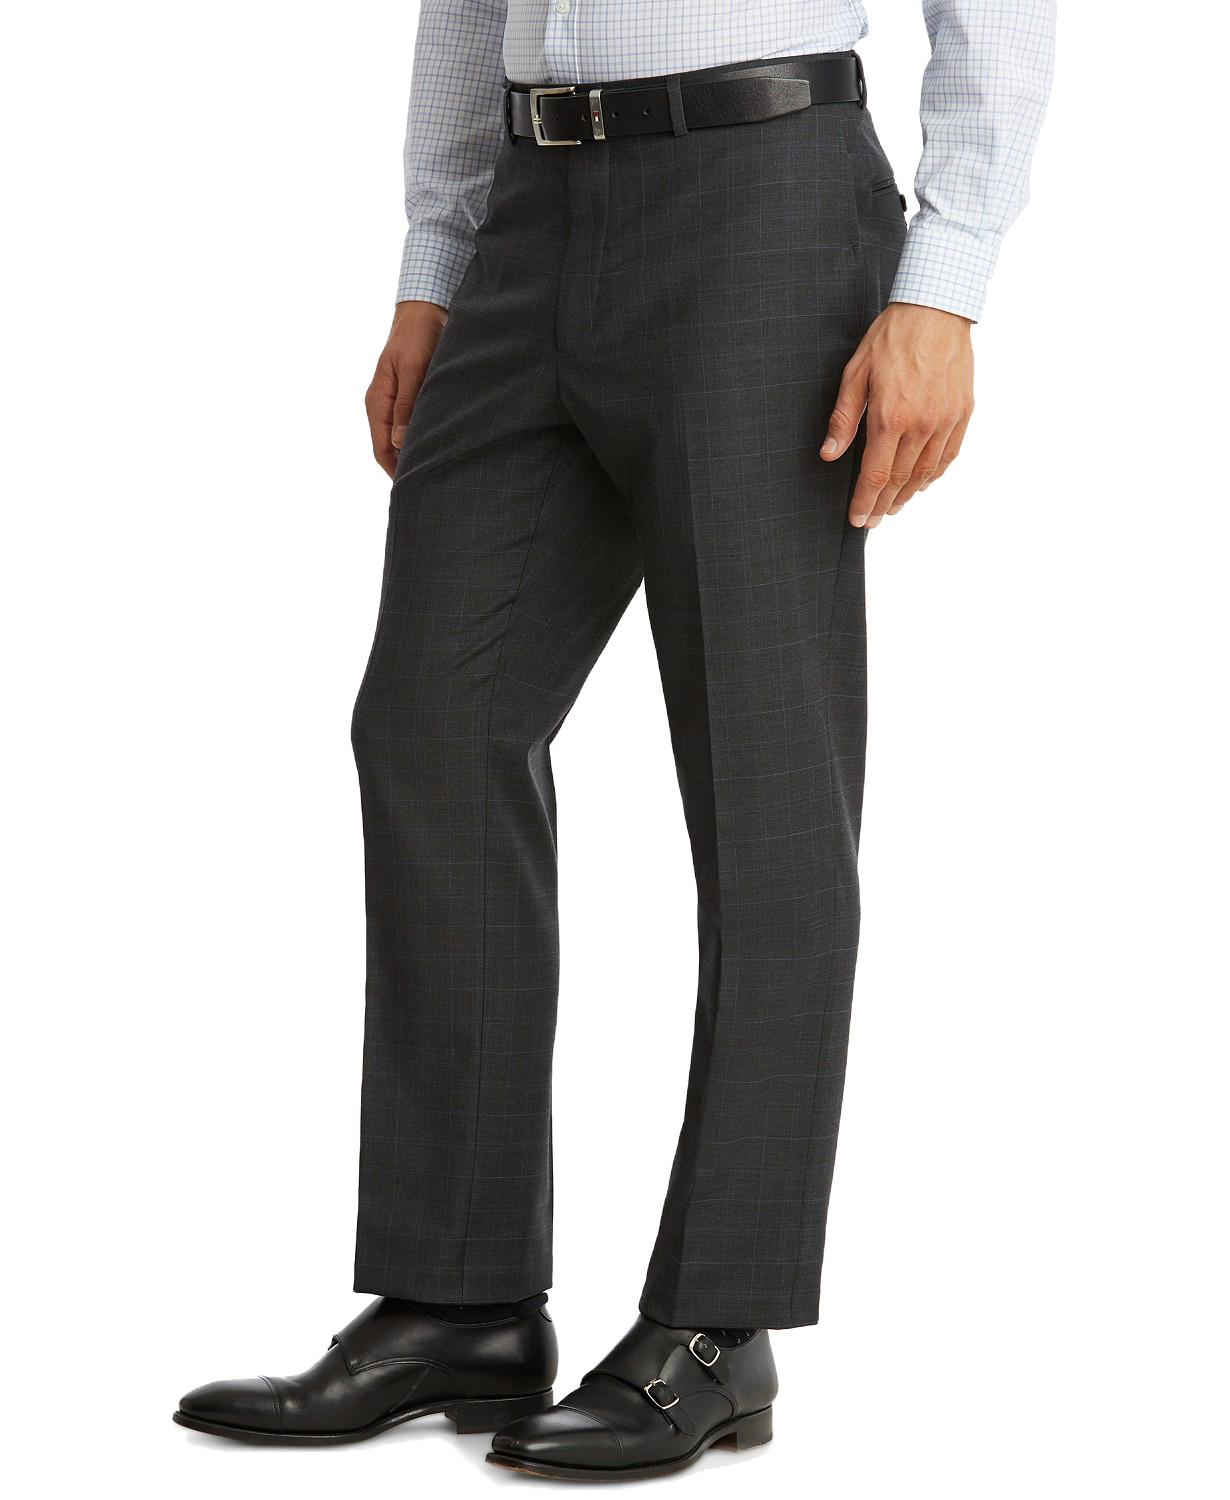 www.couturepoint.com-tommy-hilfiger-mens-grey-wool-blend-modern-fit-th-flex-performance-plaid-suit-pants